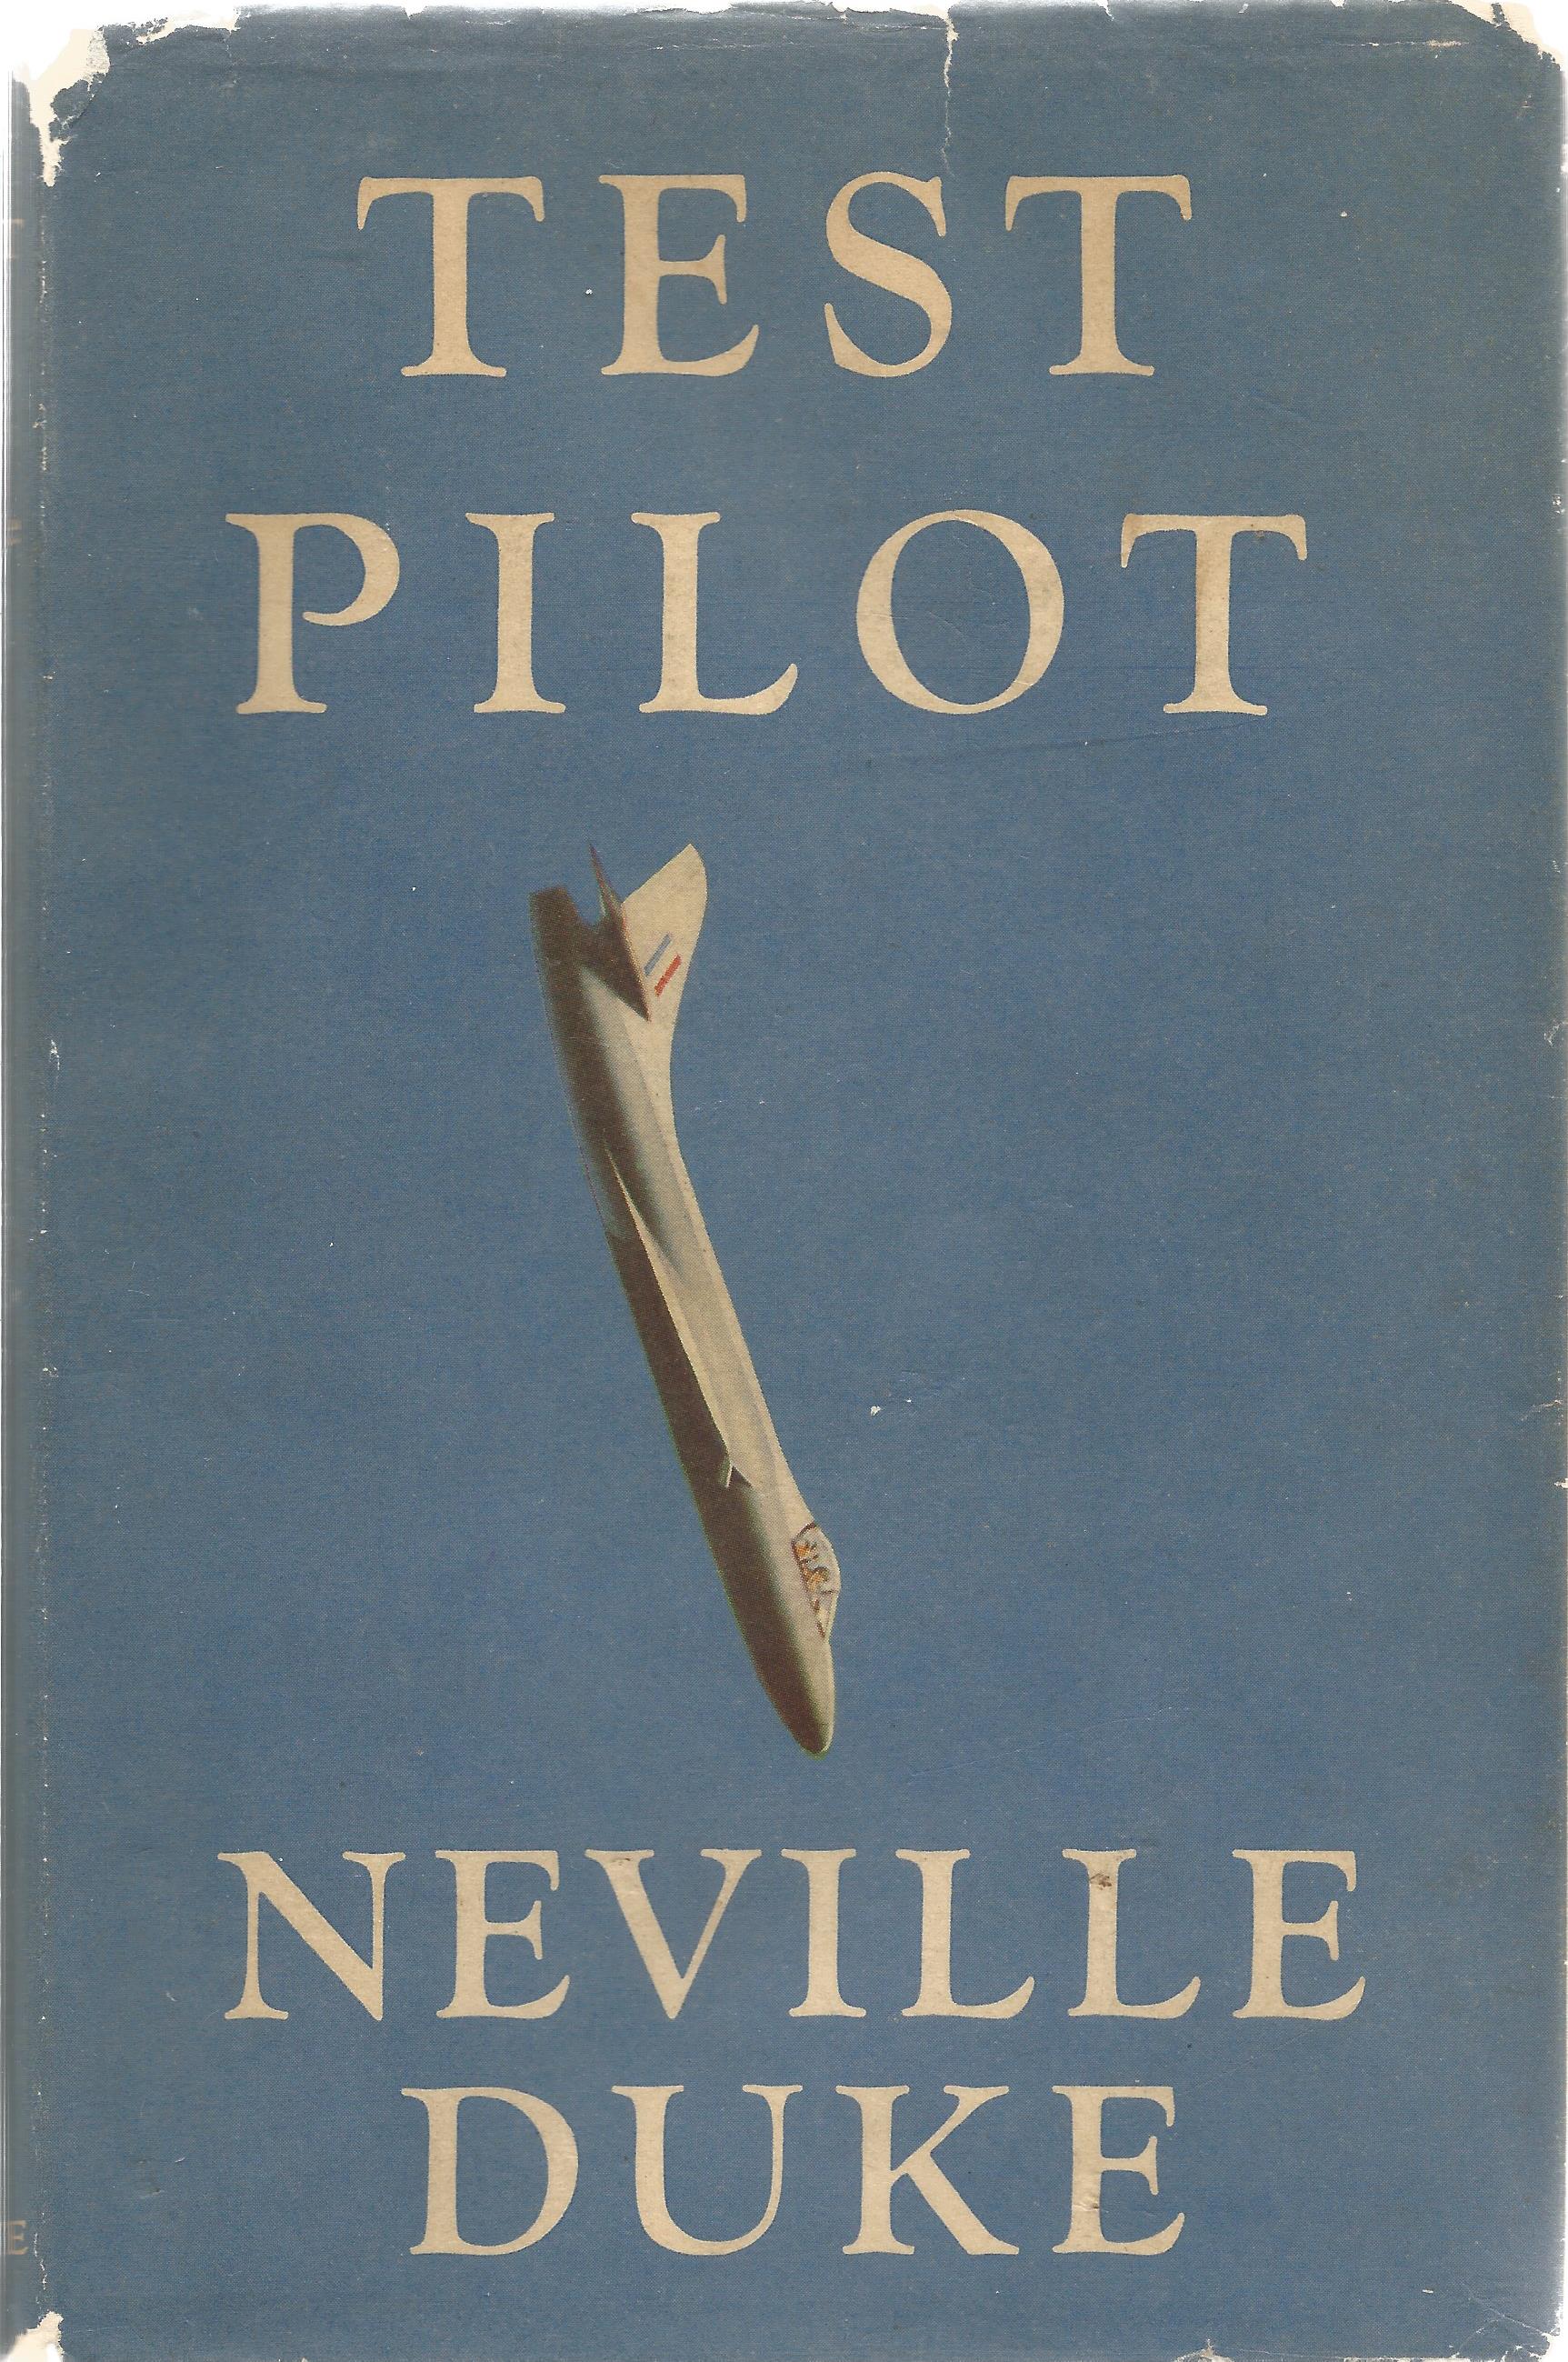 Neville Duke. Test Pilot. A First Edition Multi-signed hardback book. Signed by RAF pilots on